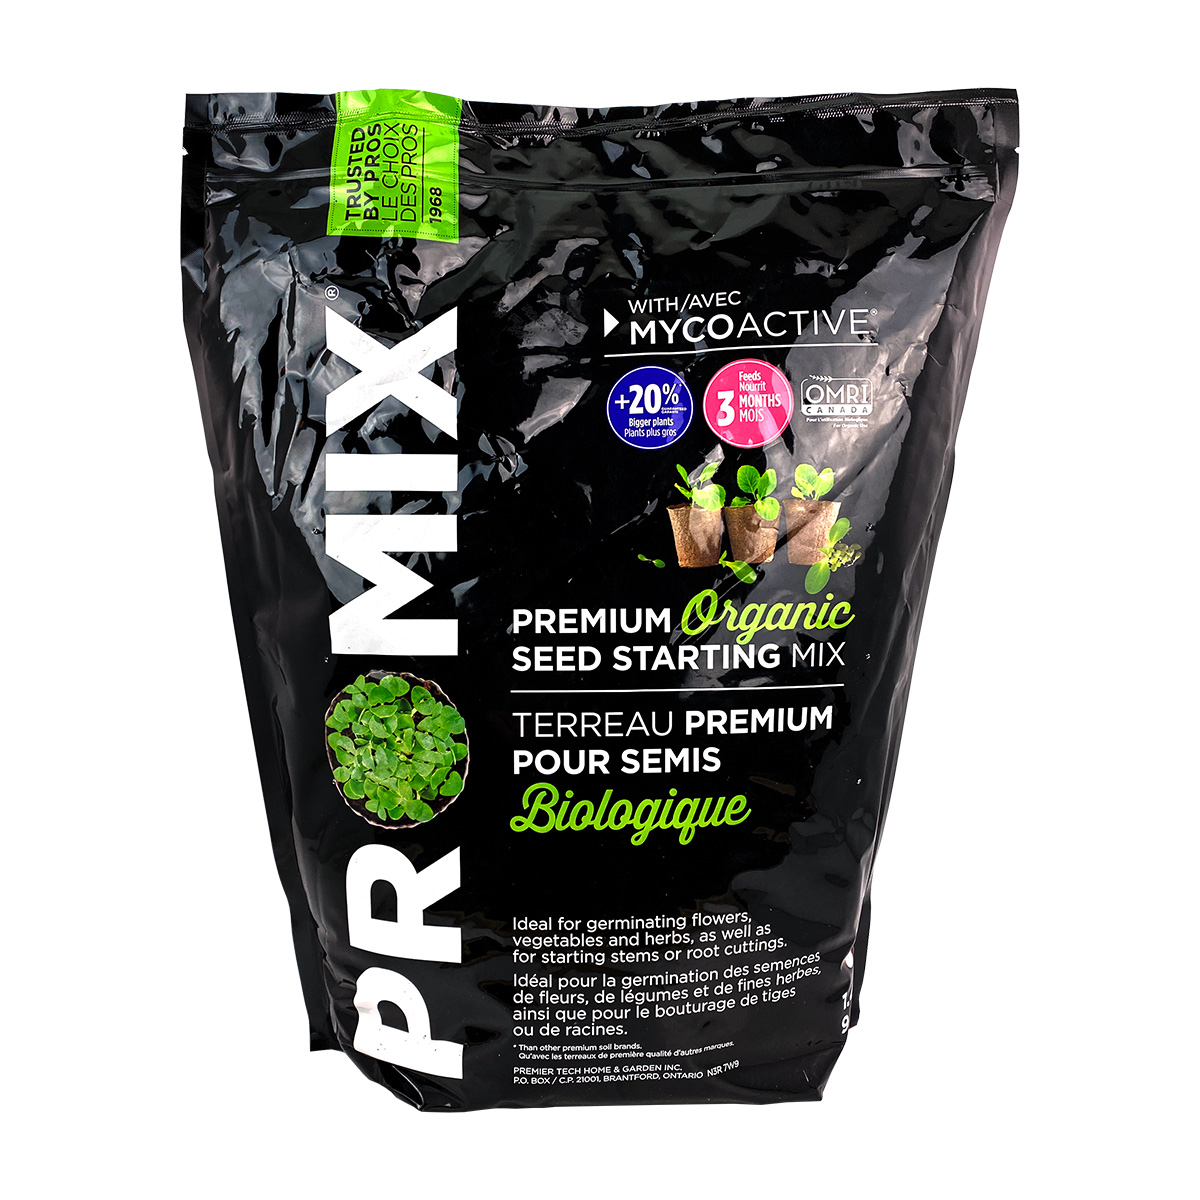 ProMix Organic Seed Starting Mix